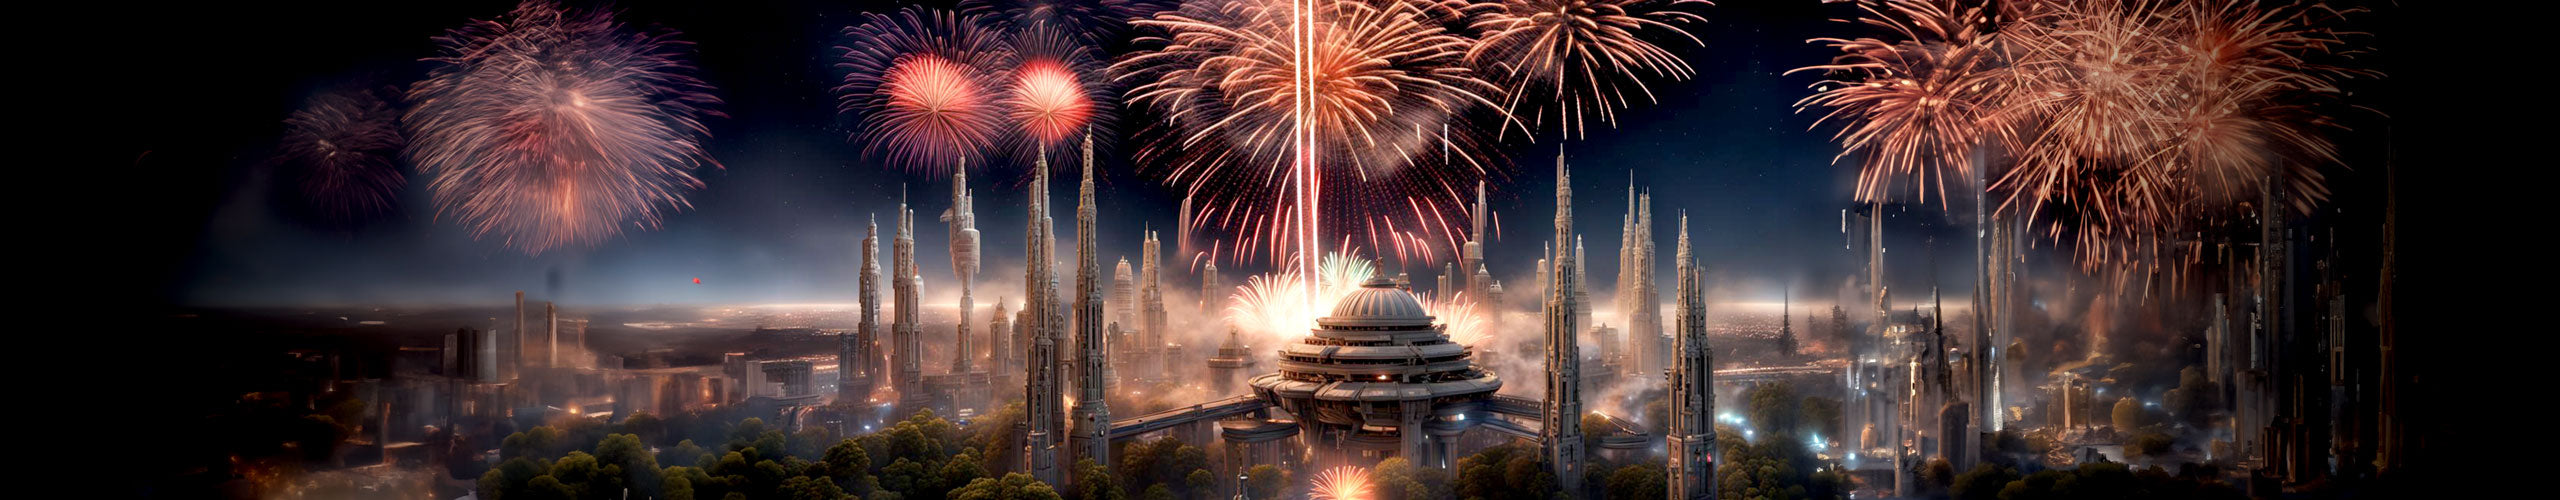 New Galactic Firework Display Coming to Disneyland Park, California